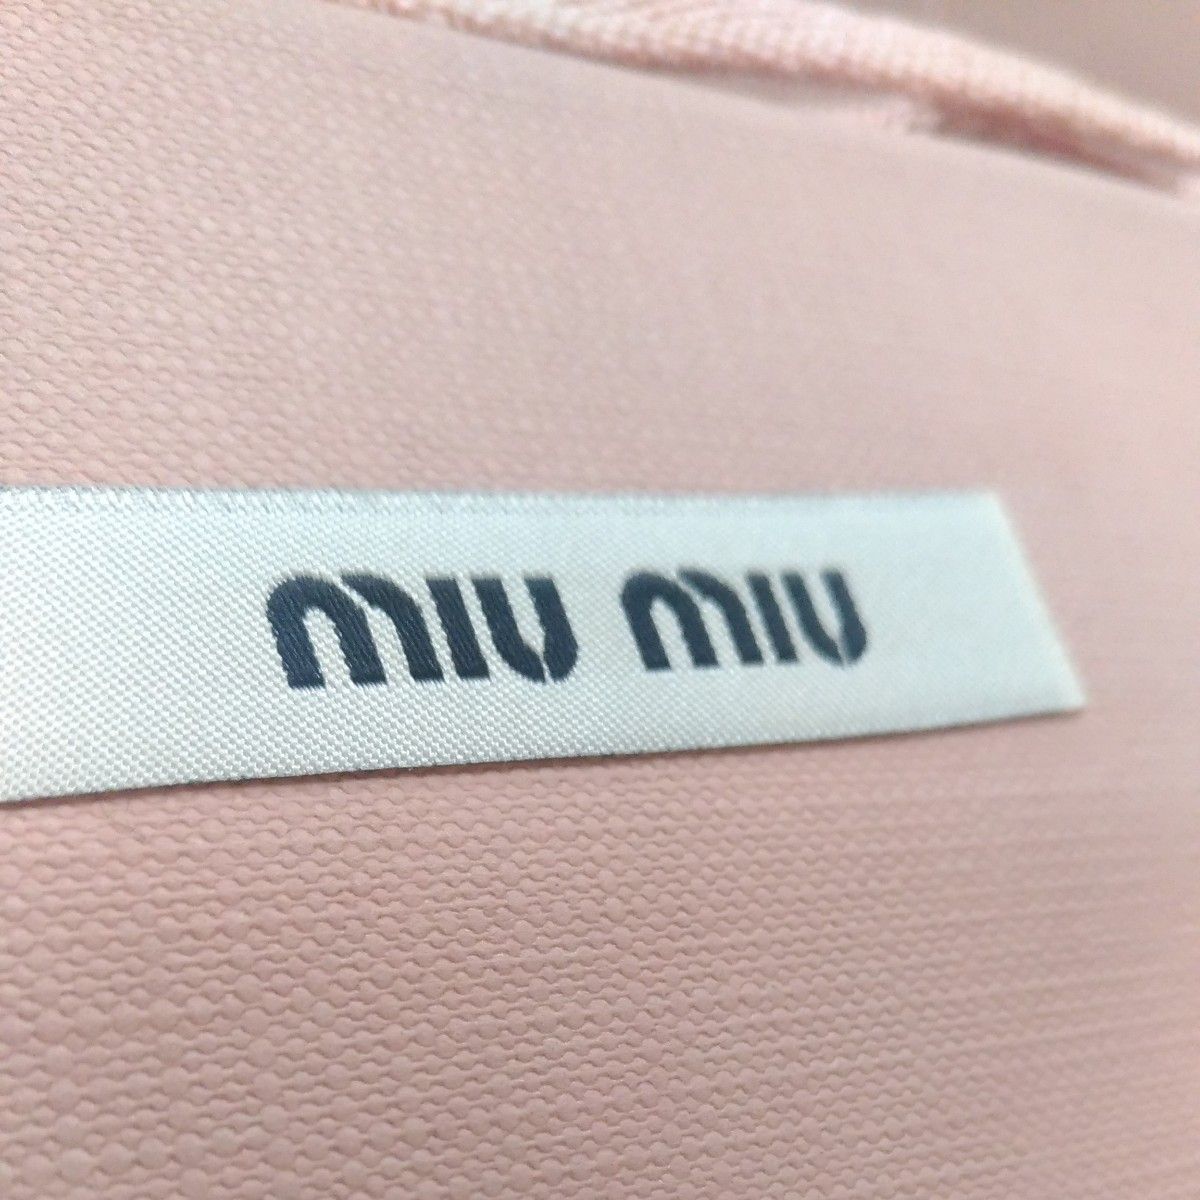 miumiu ショッパー 巾着袋 リボン セット売り ピンク レッド 紙袋 布袋